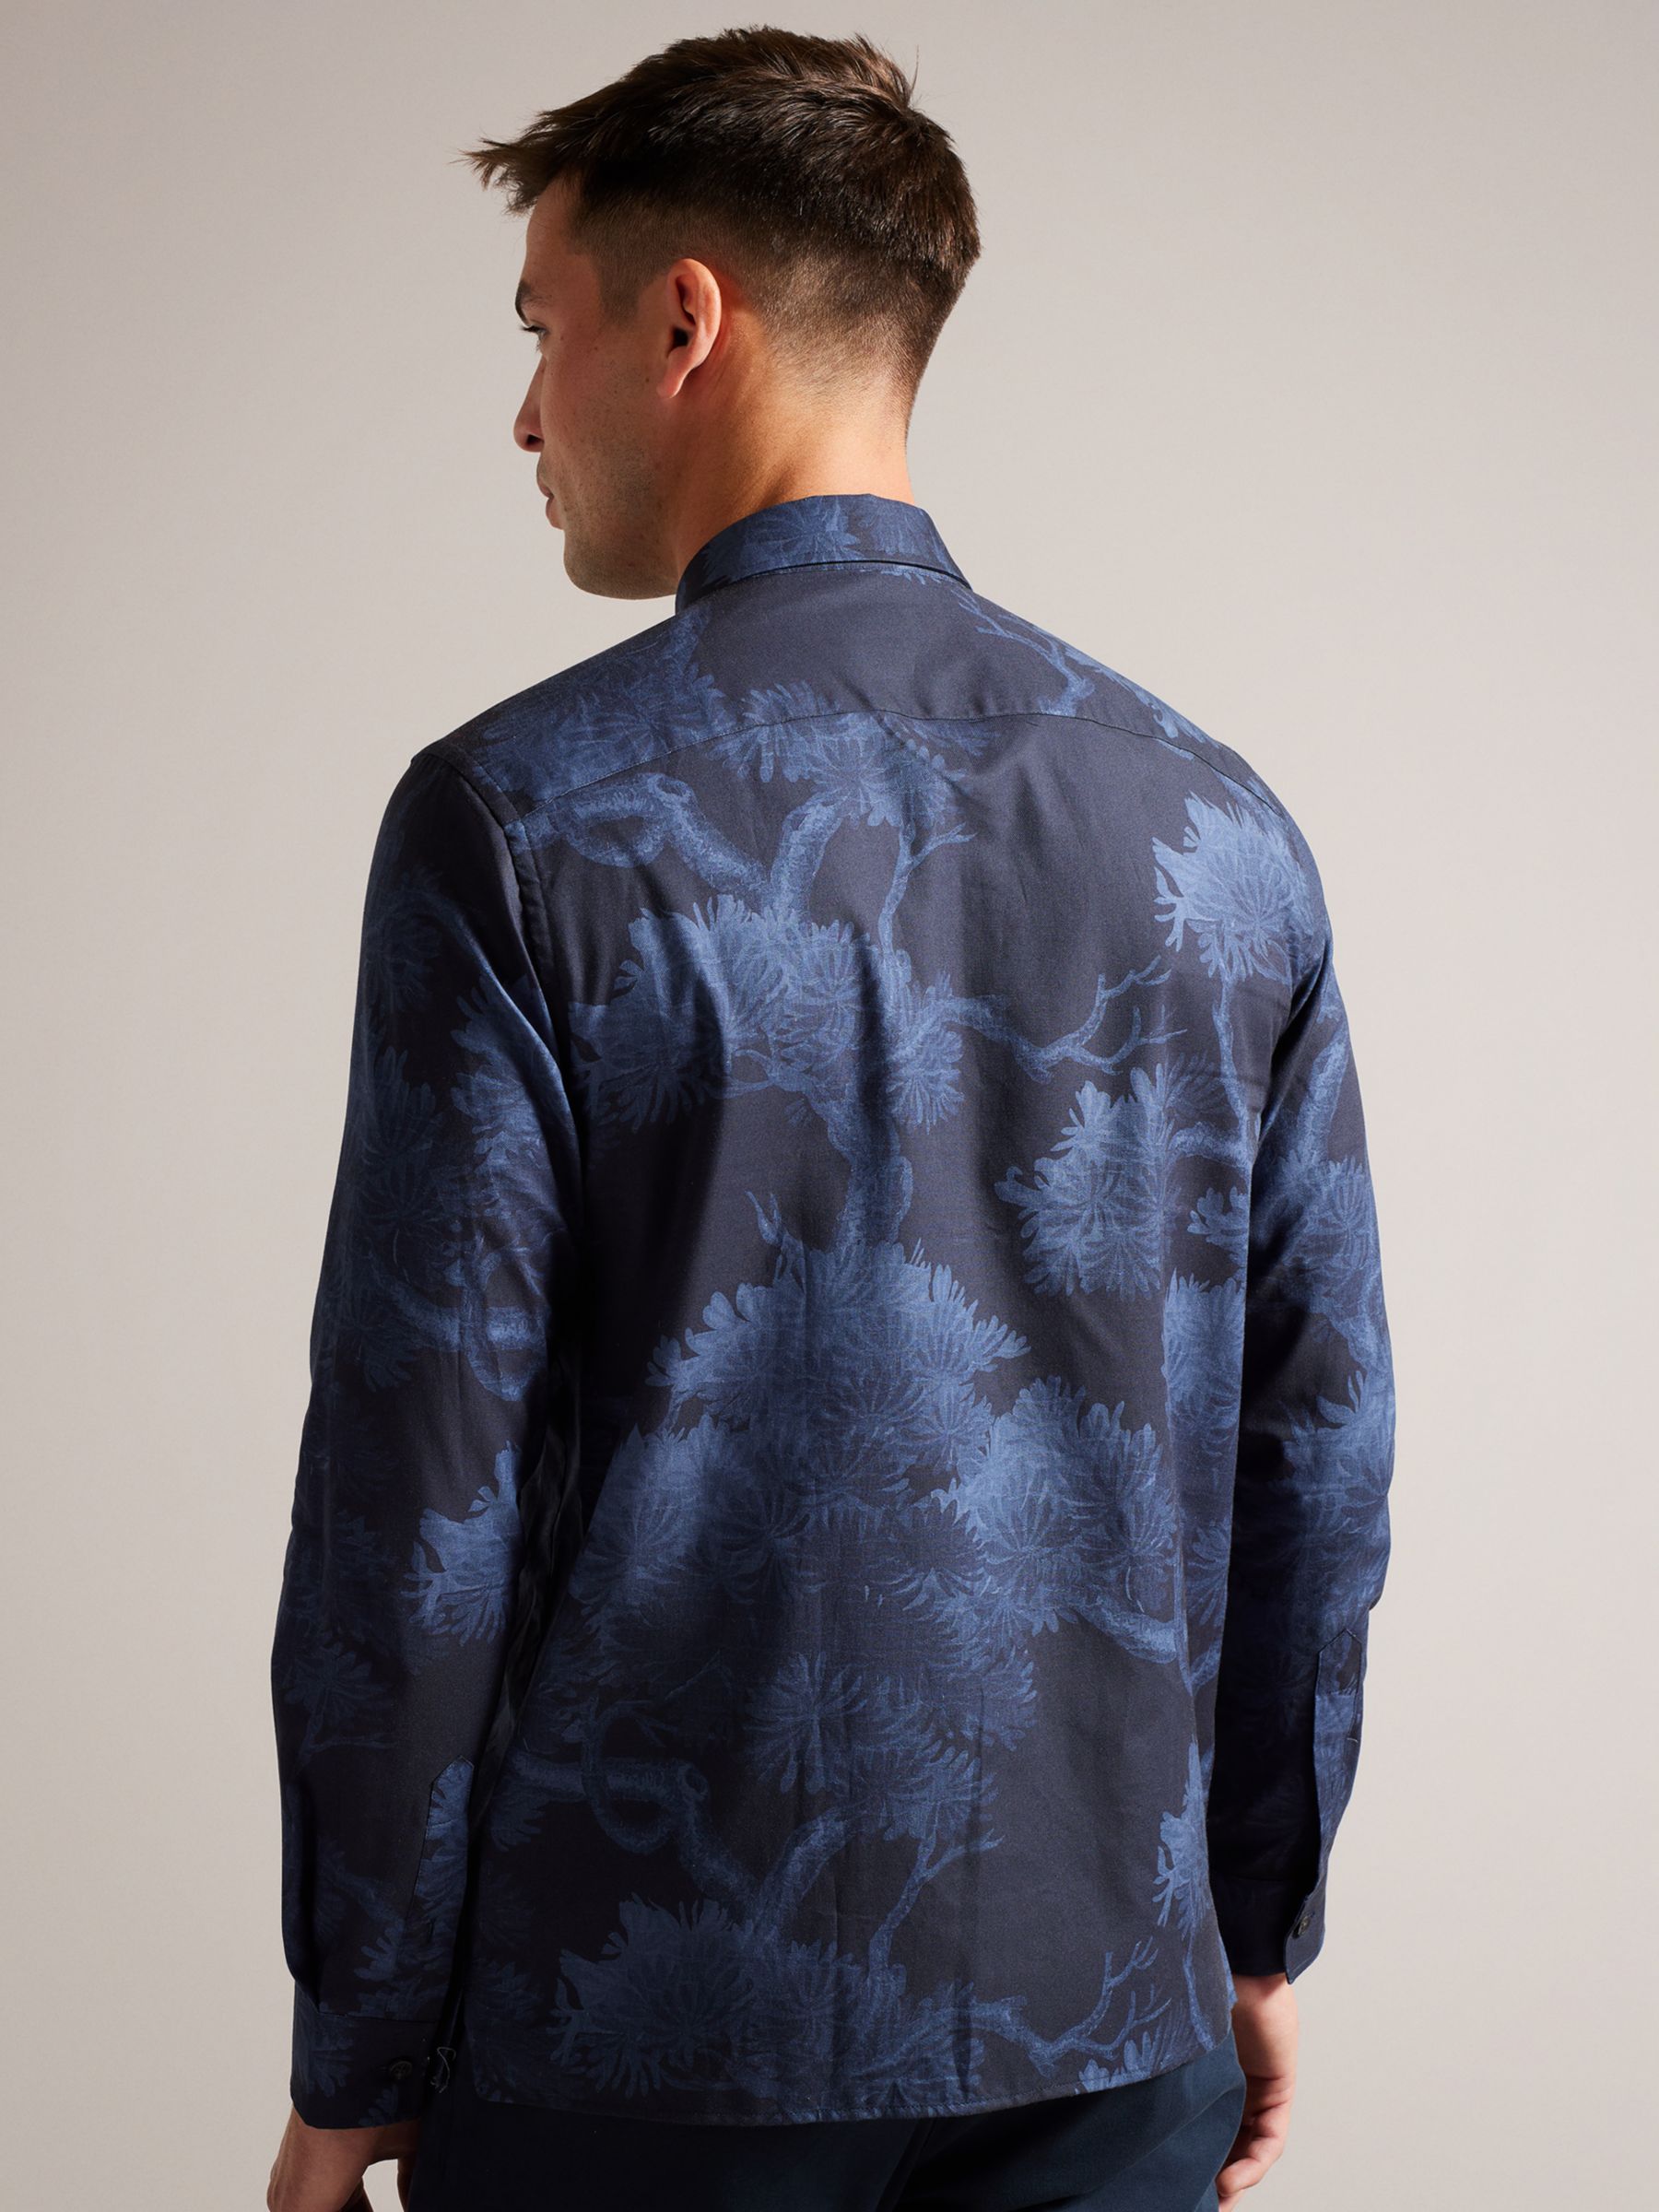 Ted Baker Goxhill Tree Print Long Sleeve Shirt, Dark Blue, S